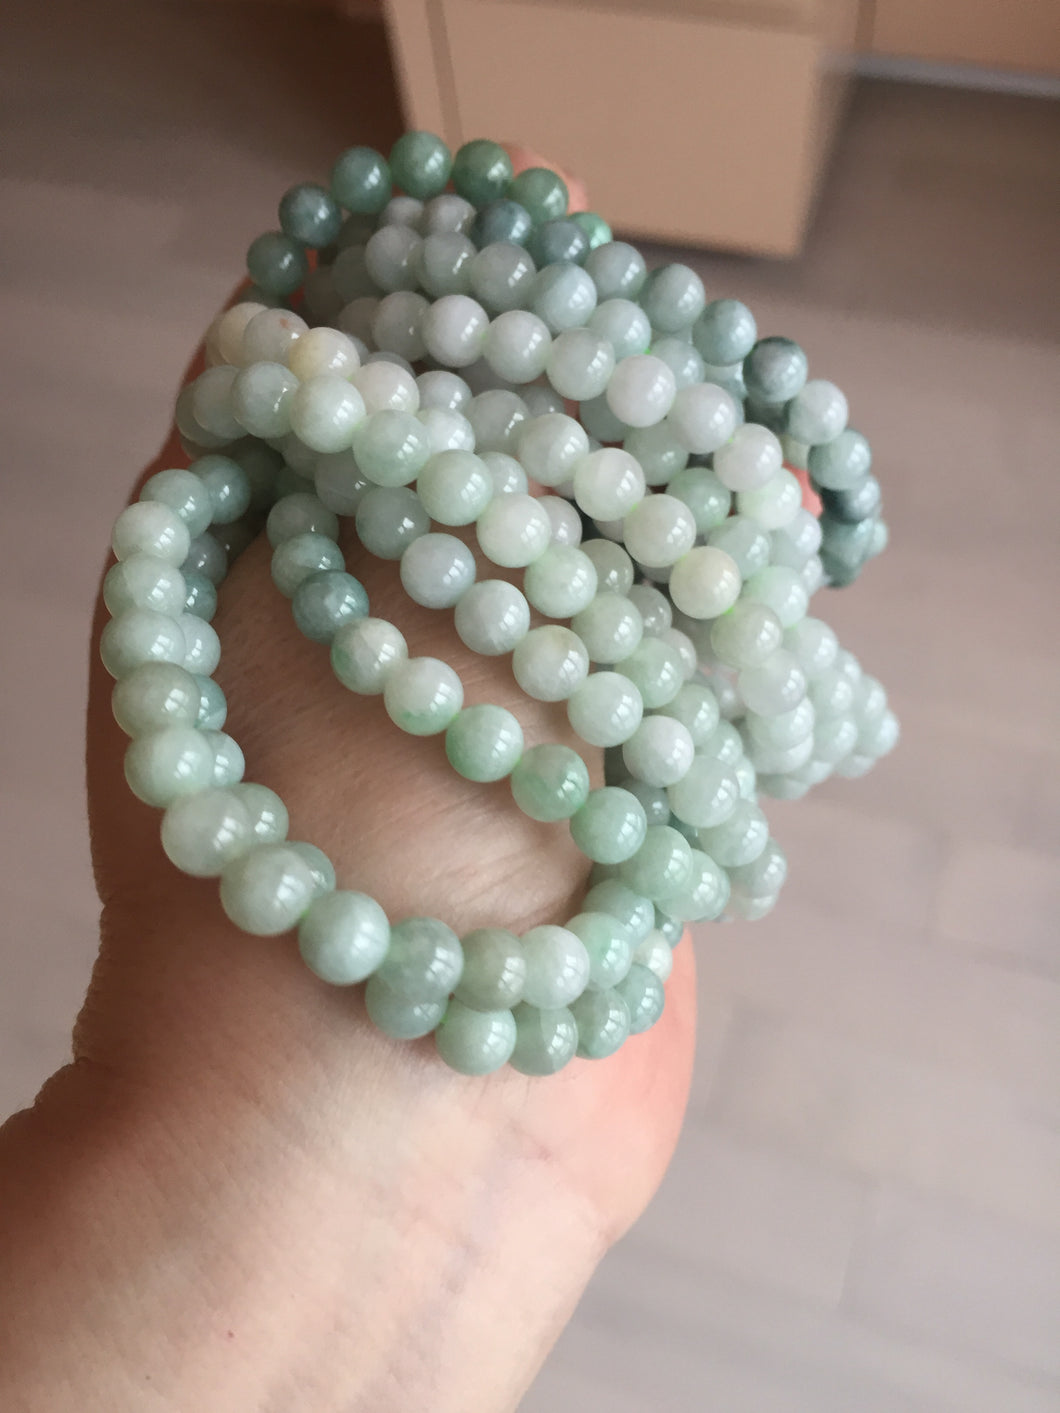 6.3mm 100% natural type A green/white jadeite jade beads bracelet group BK104 added-on item